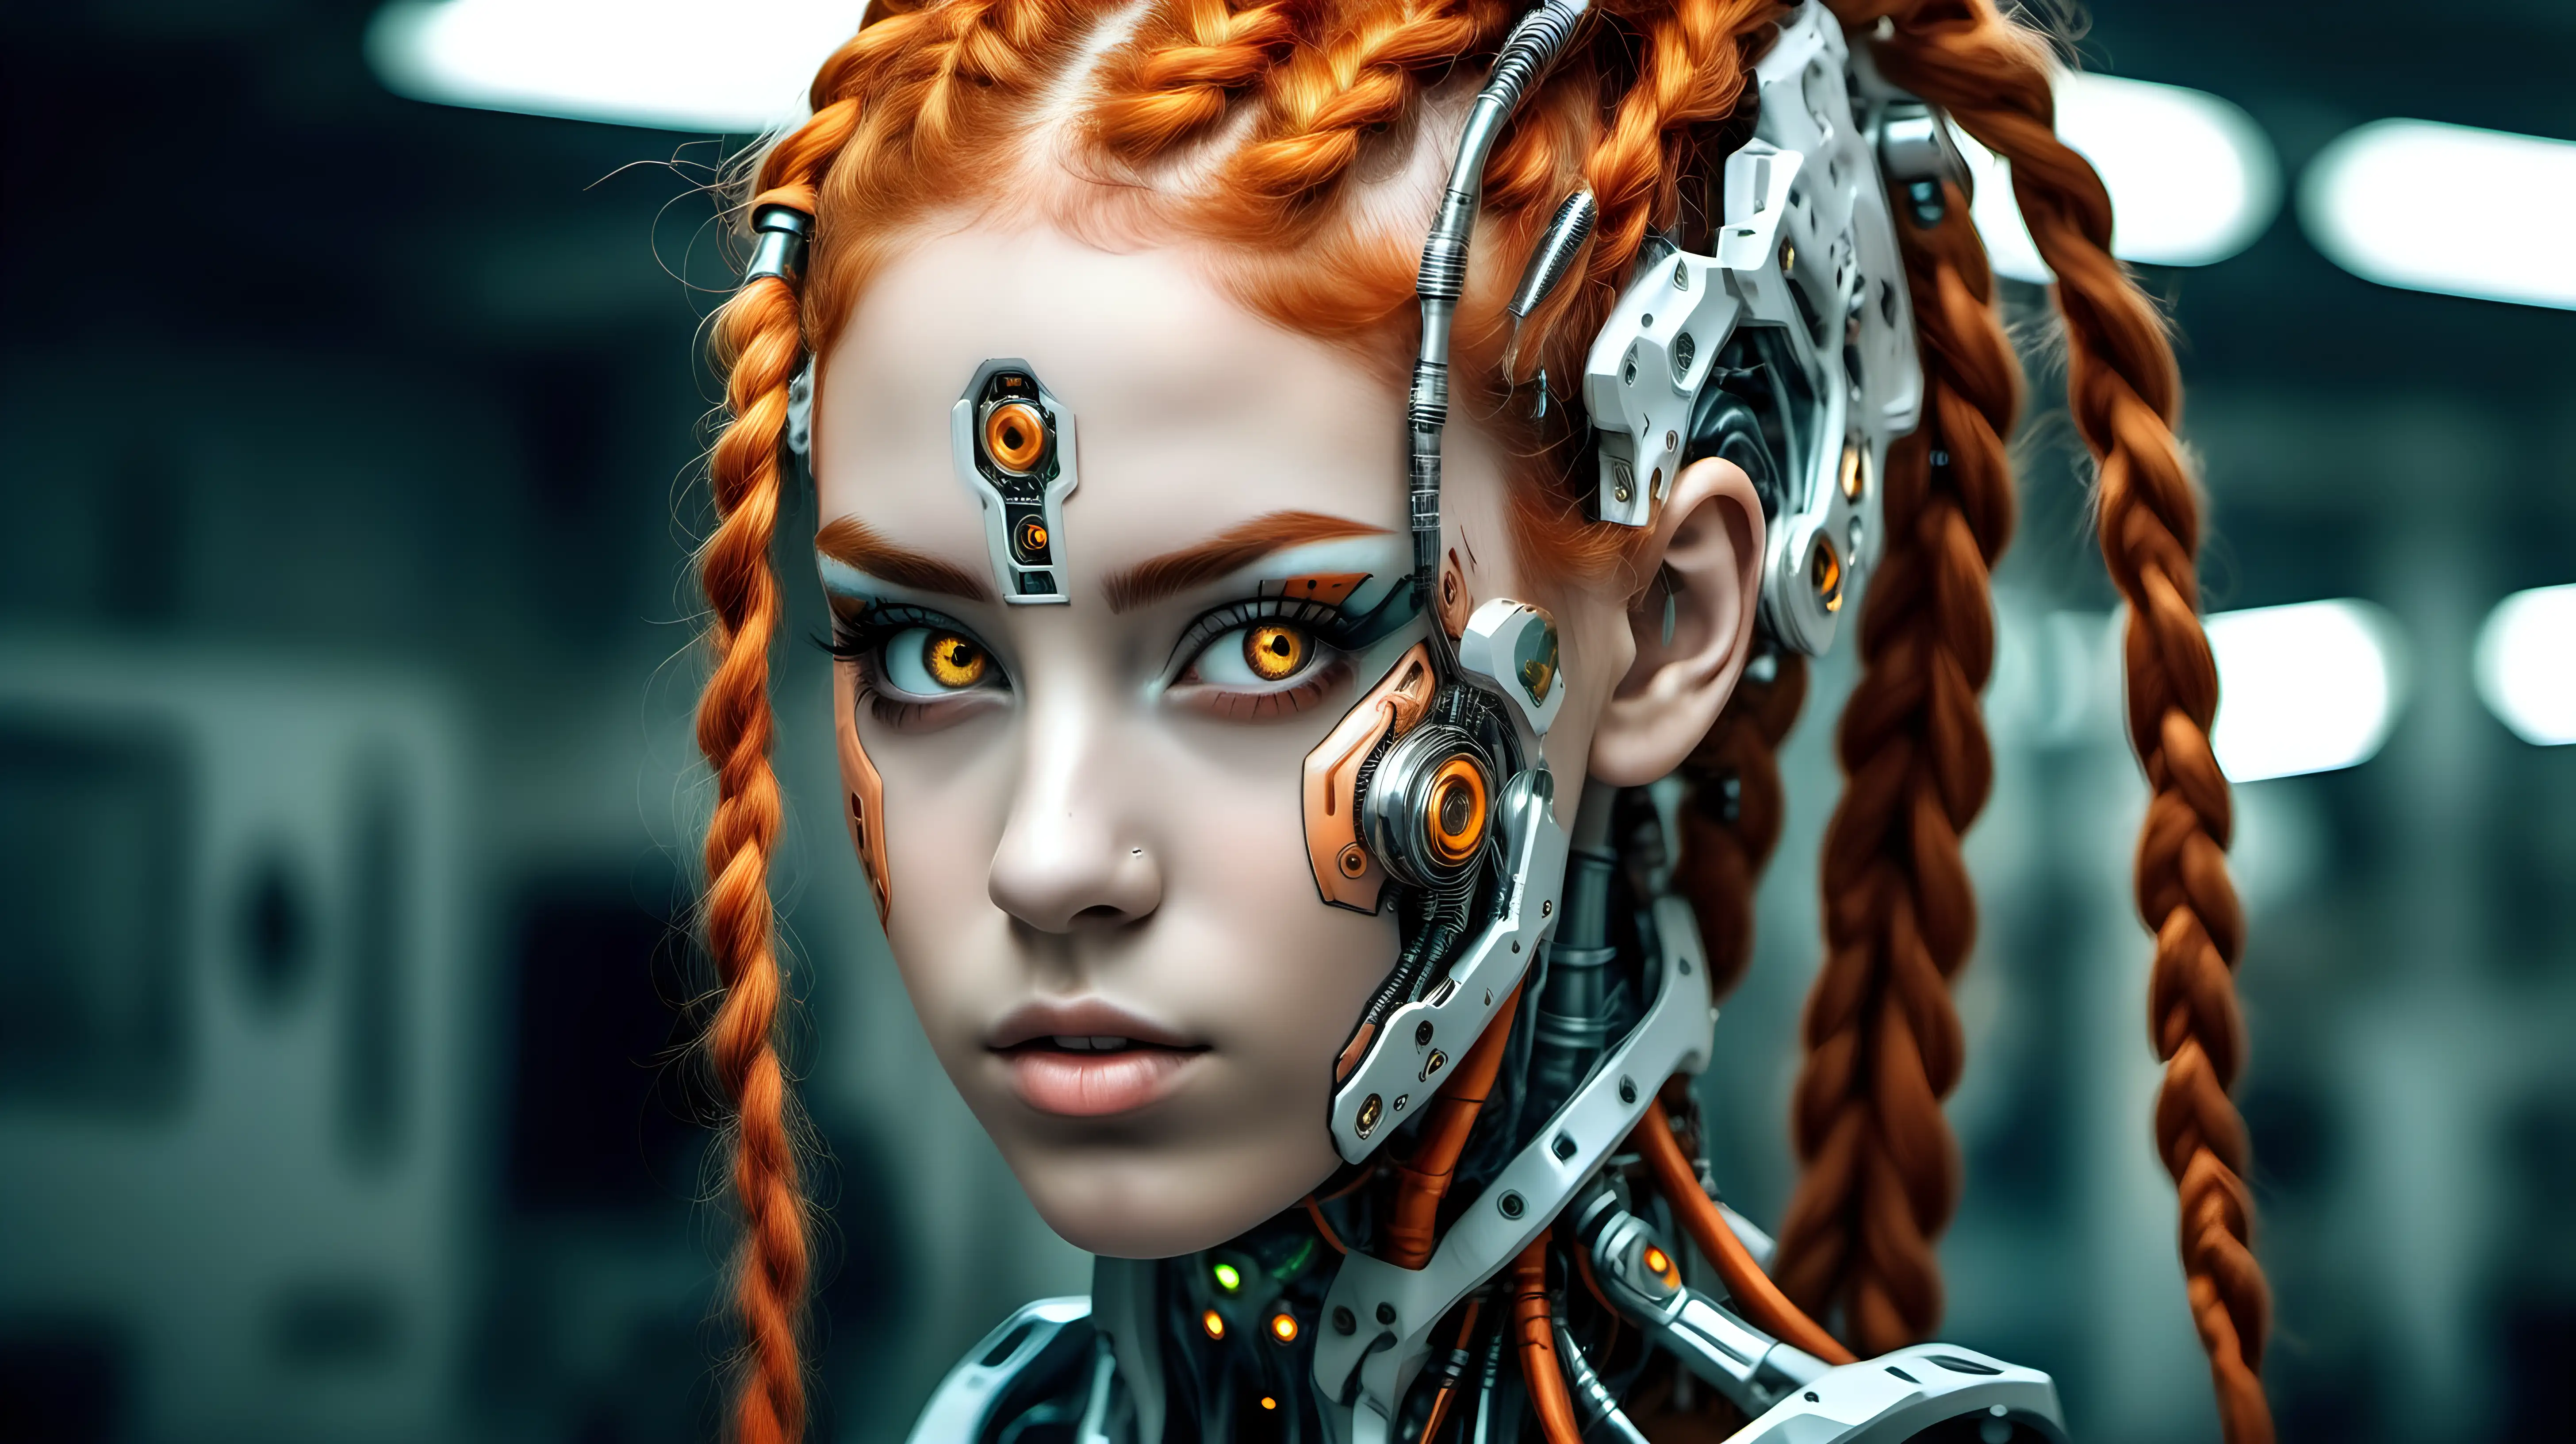 Stunning 18YearOld Cyborg with Wild Orange Braids and Green Eyes